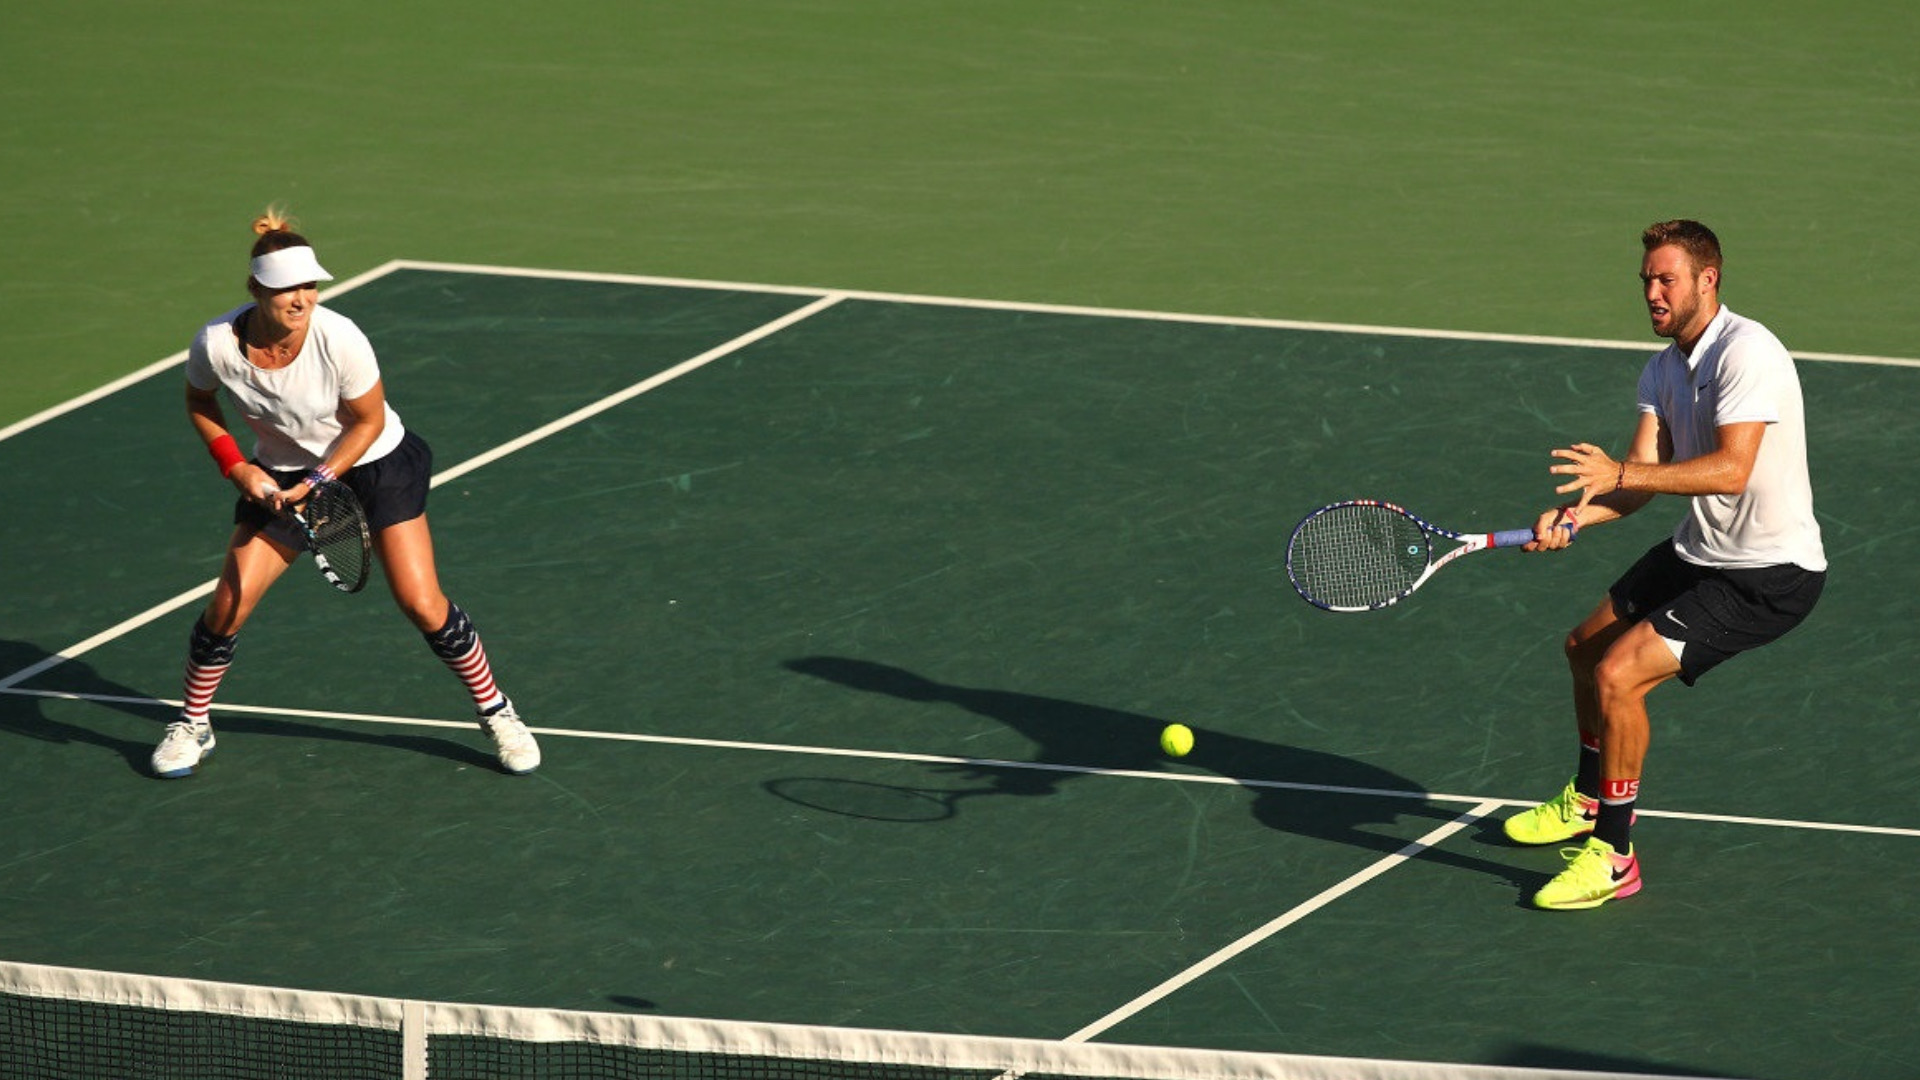 Теннис игроки мужчины. Большой теннис. Игра в теннис. Вид спорта теннис. Спорт большой теннис.